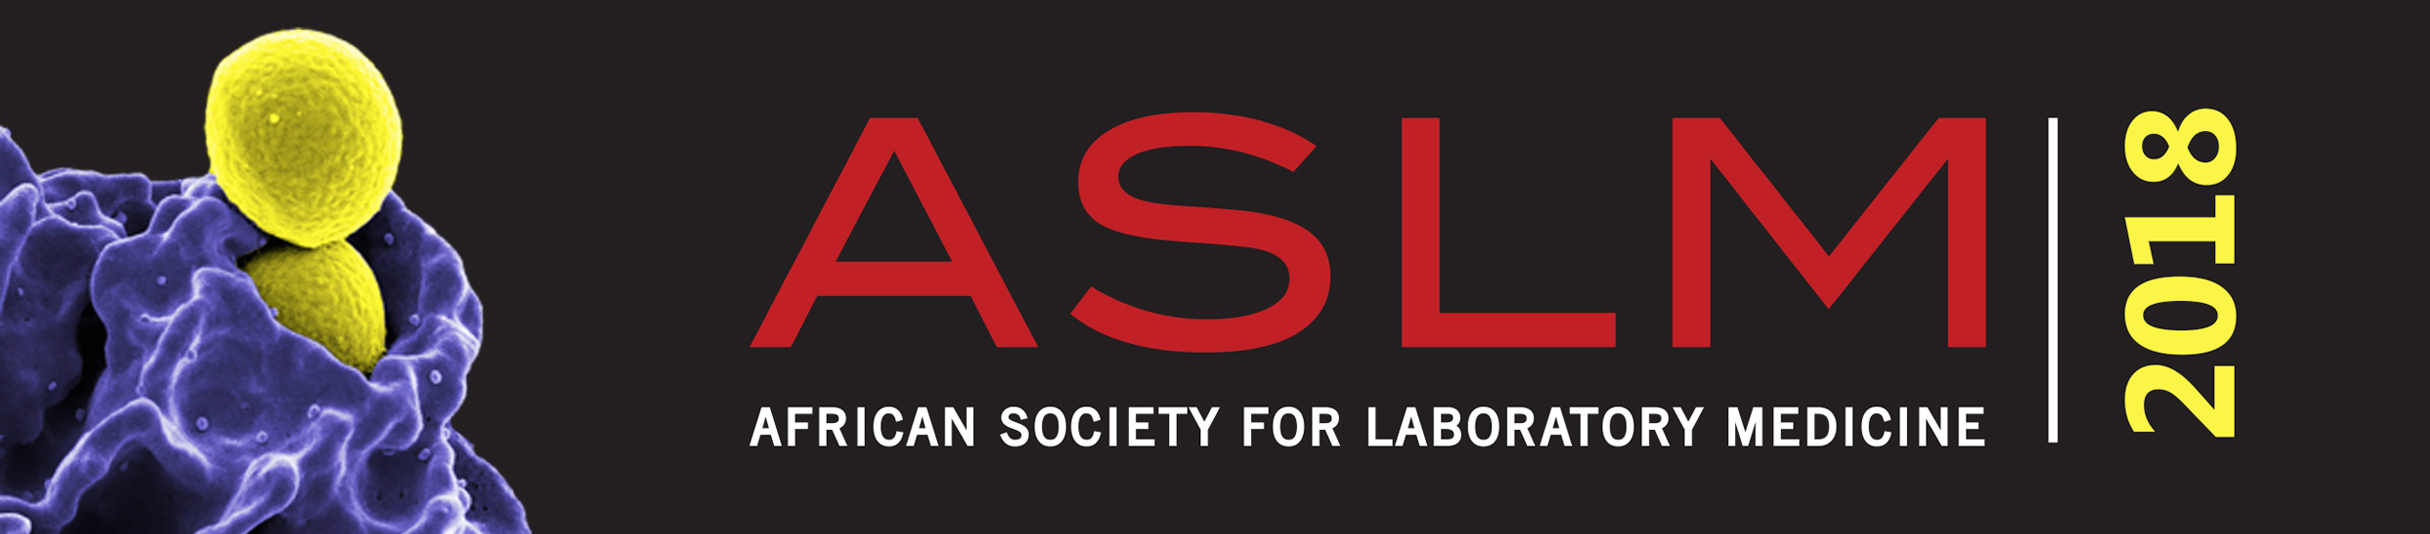 ASLM2016-logo-small2x